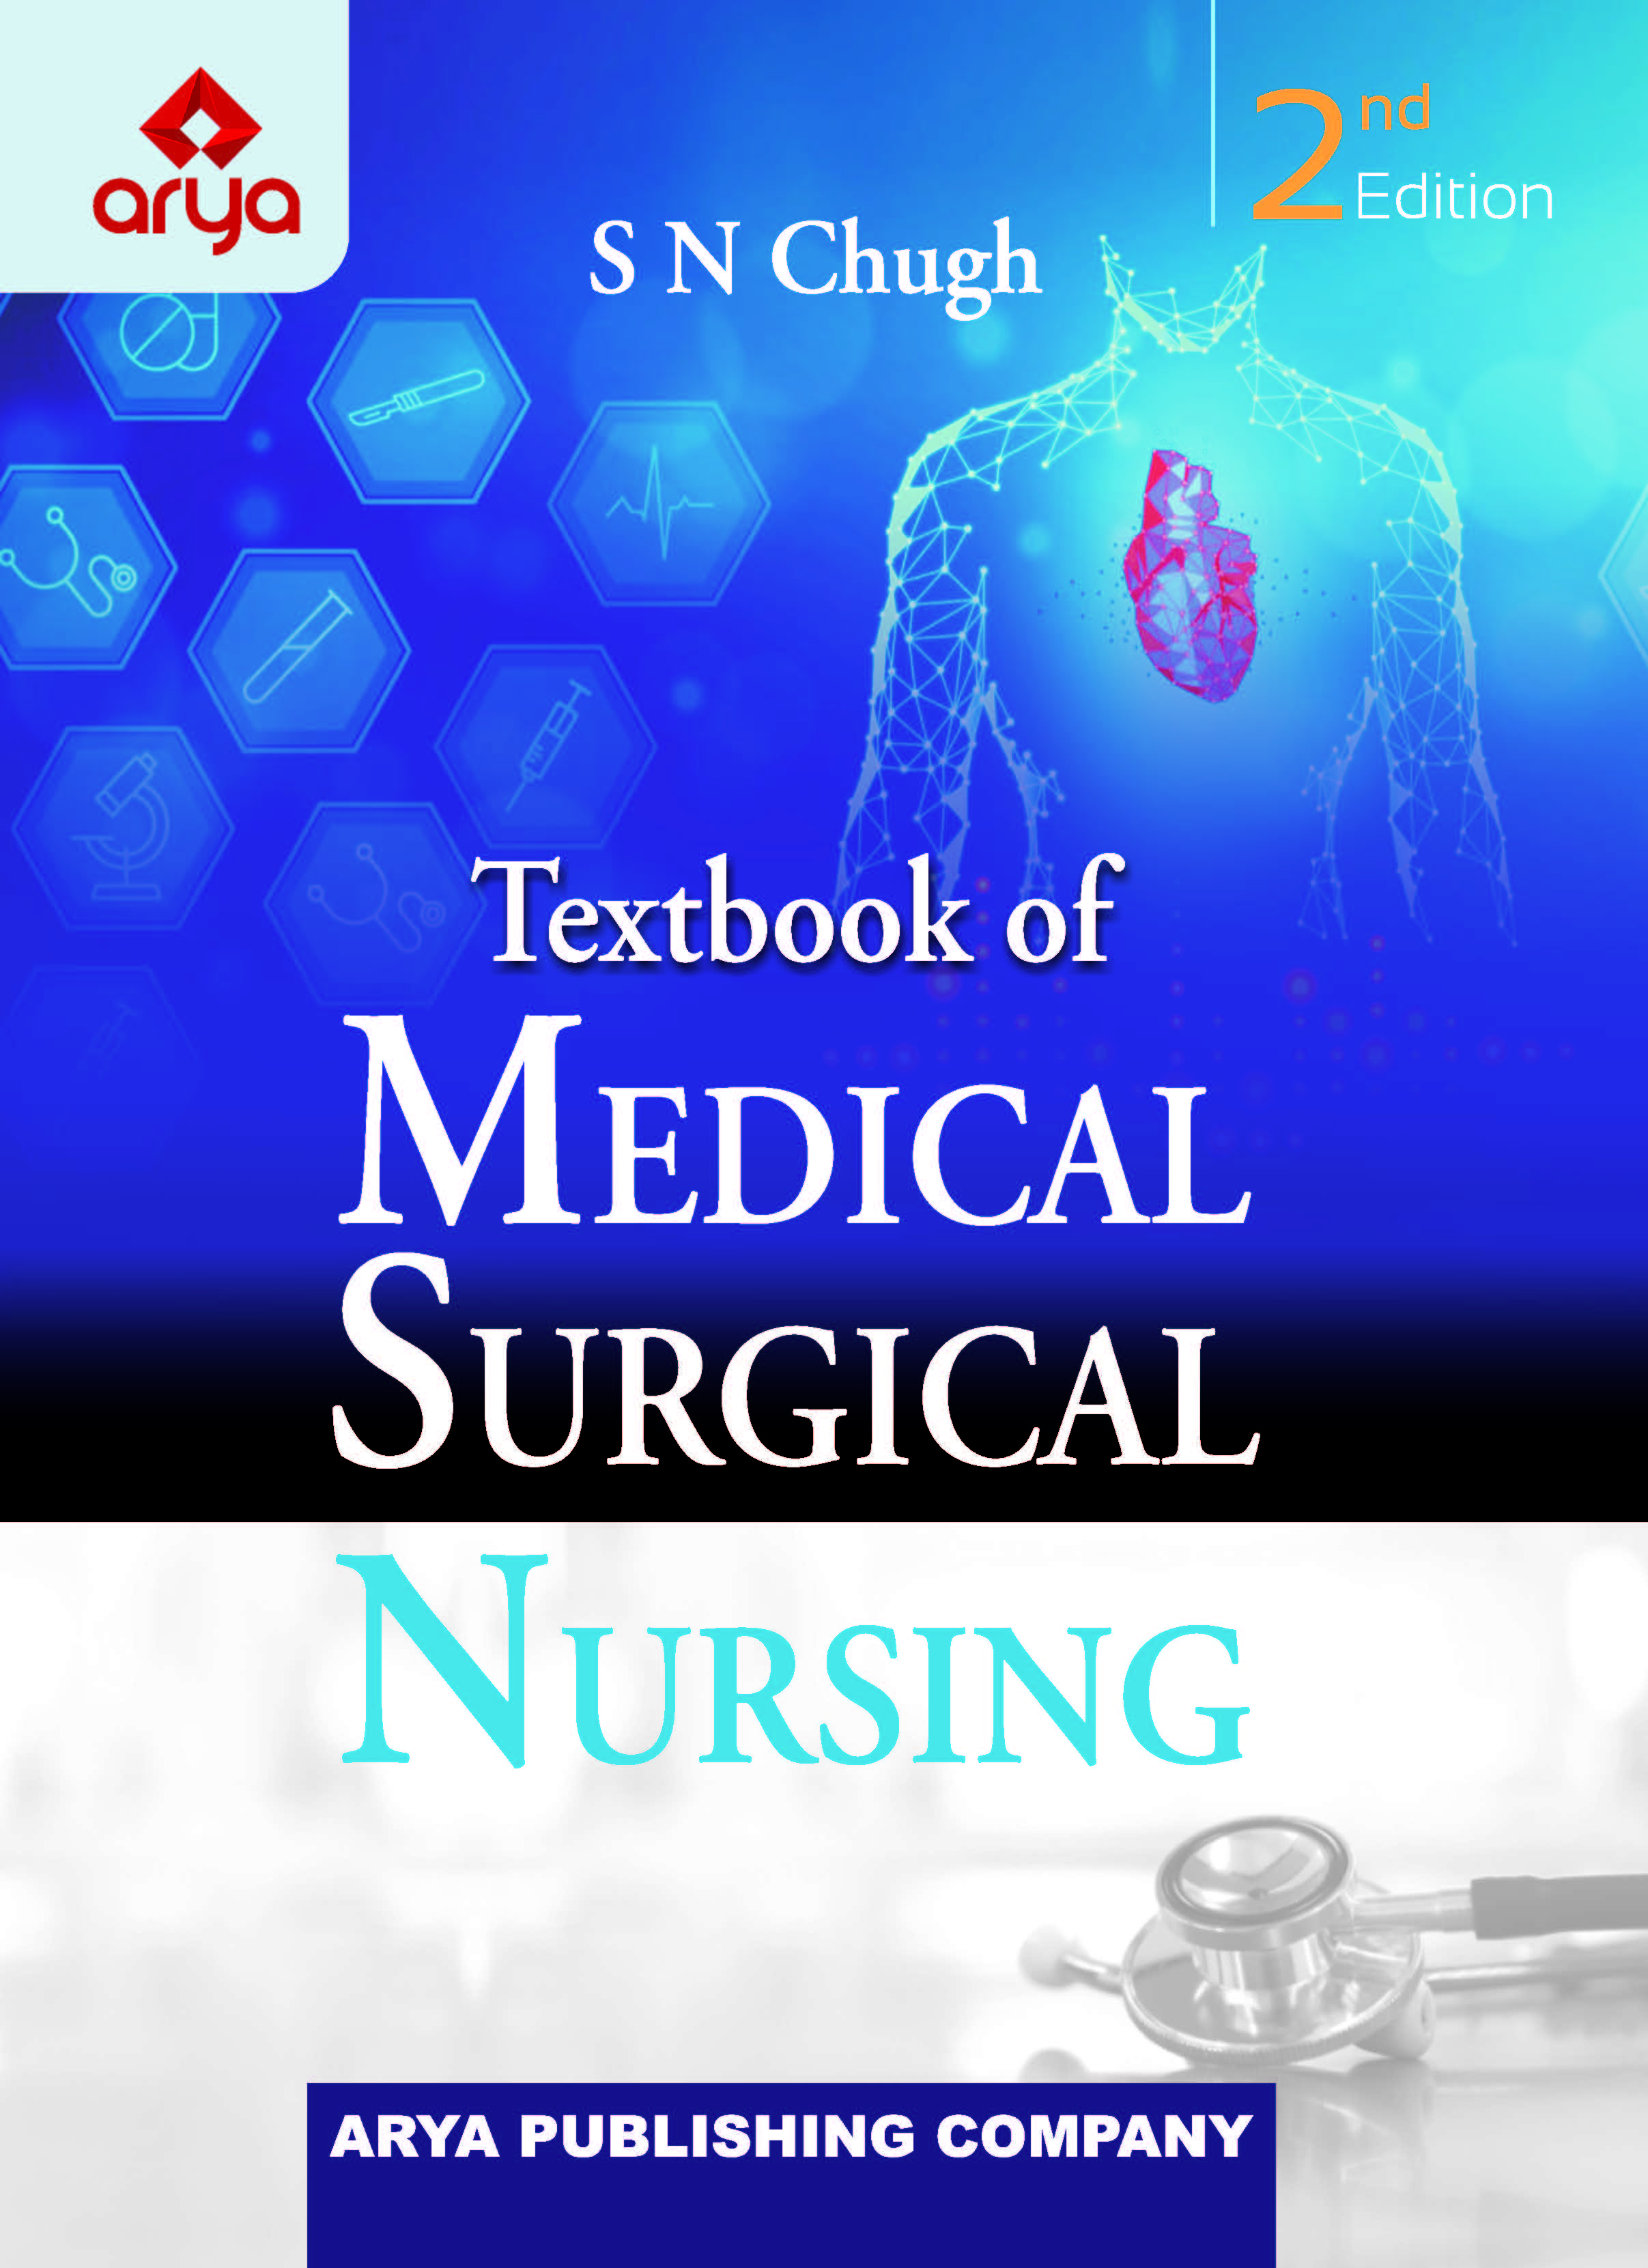 Textbook of Medical Surgical Nursing